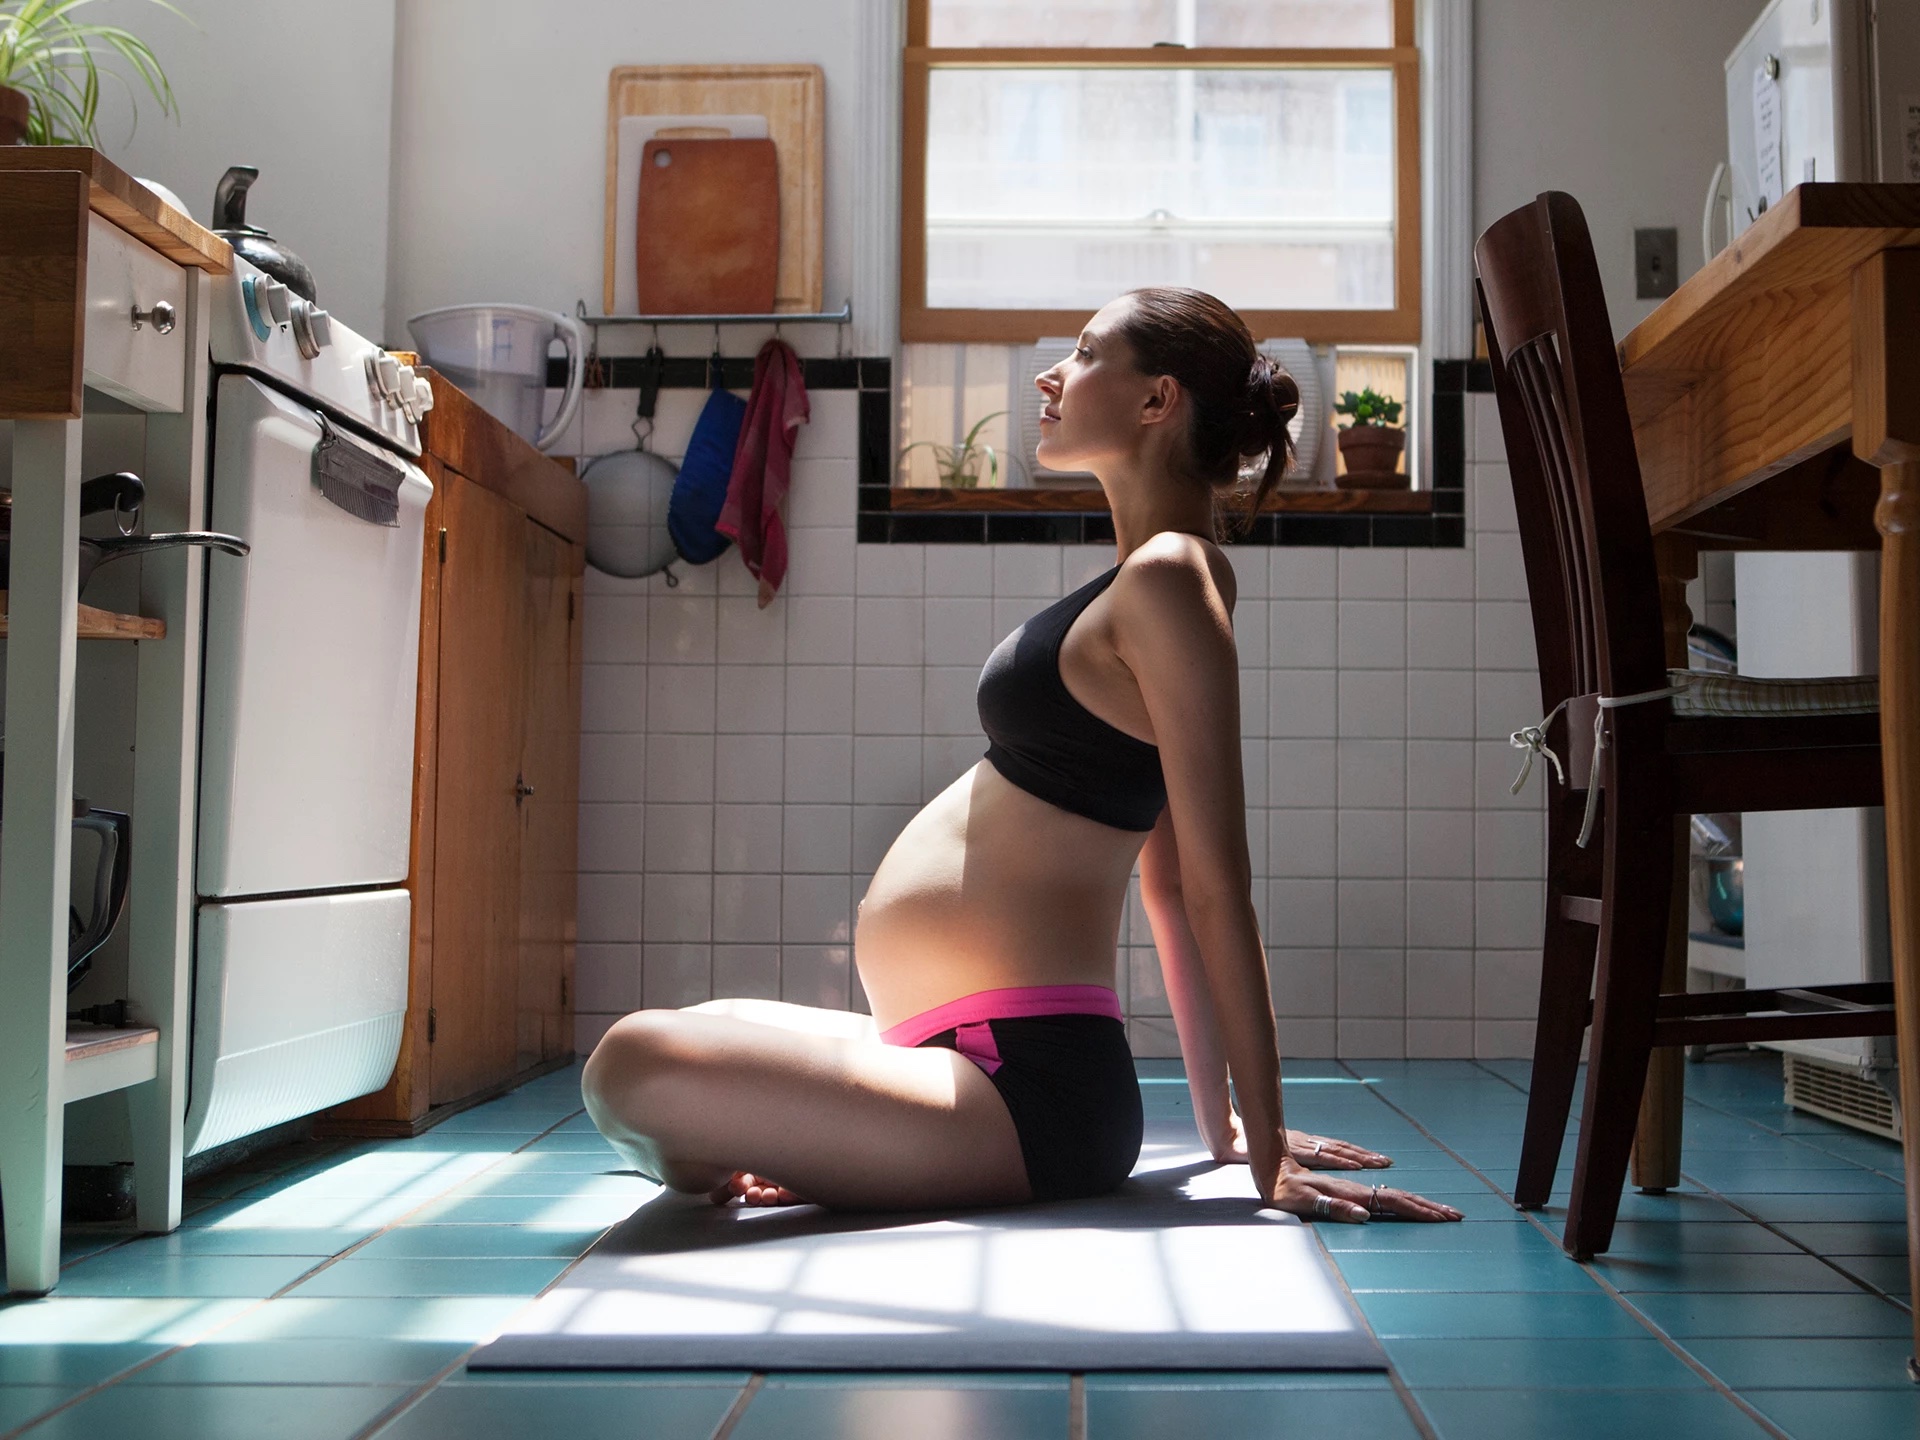 Pelvic floor exercises  Pregnancy Birth and Baby